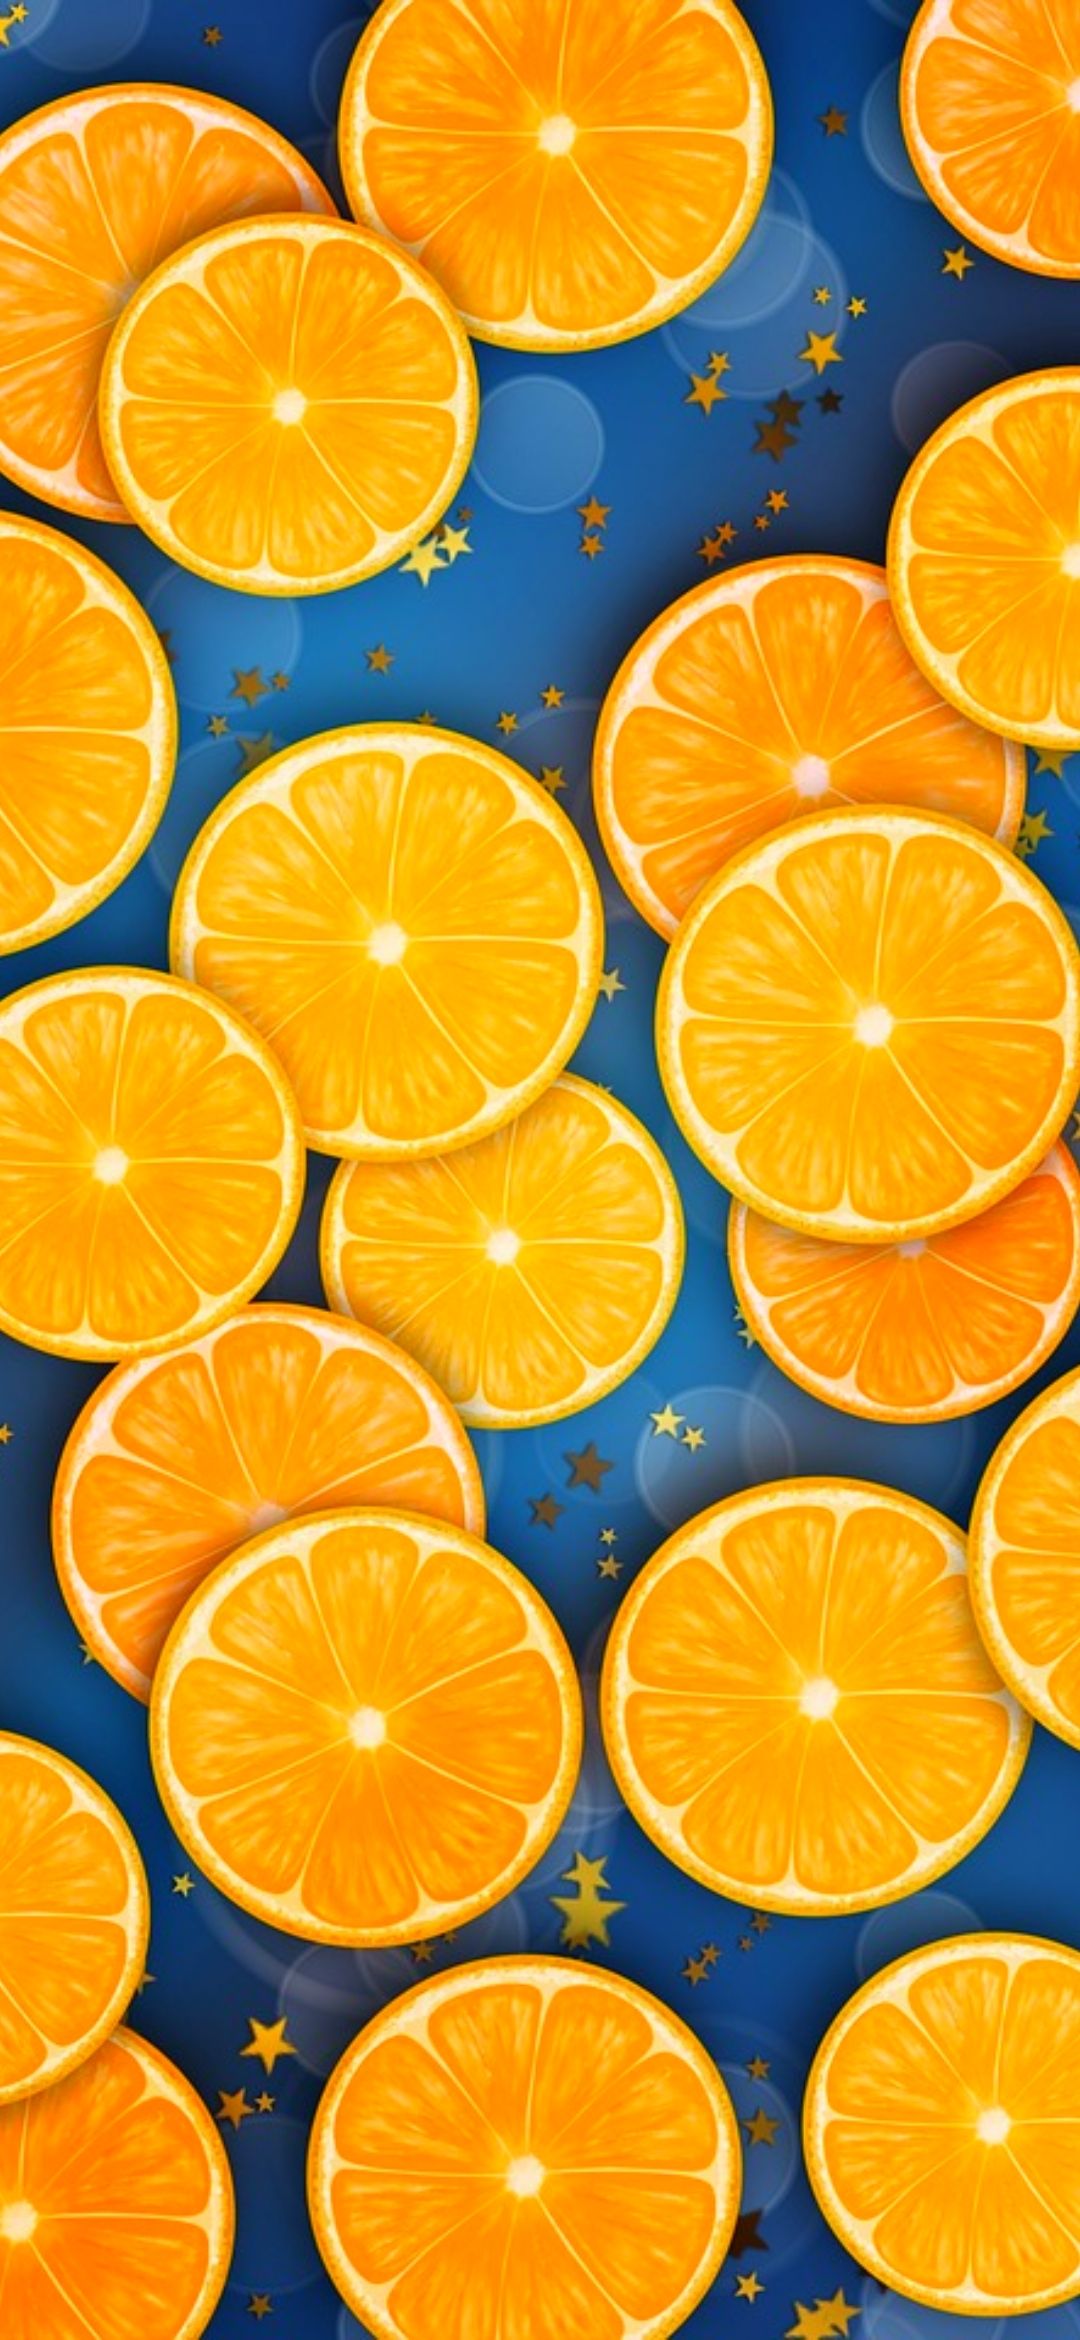 Orange Wallpaper 6